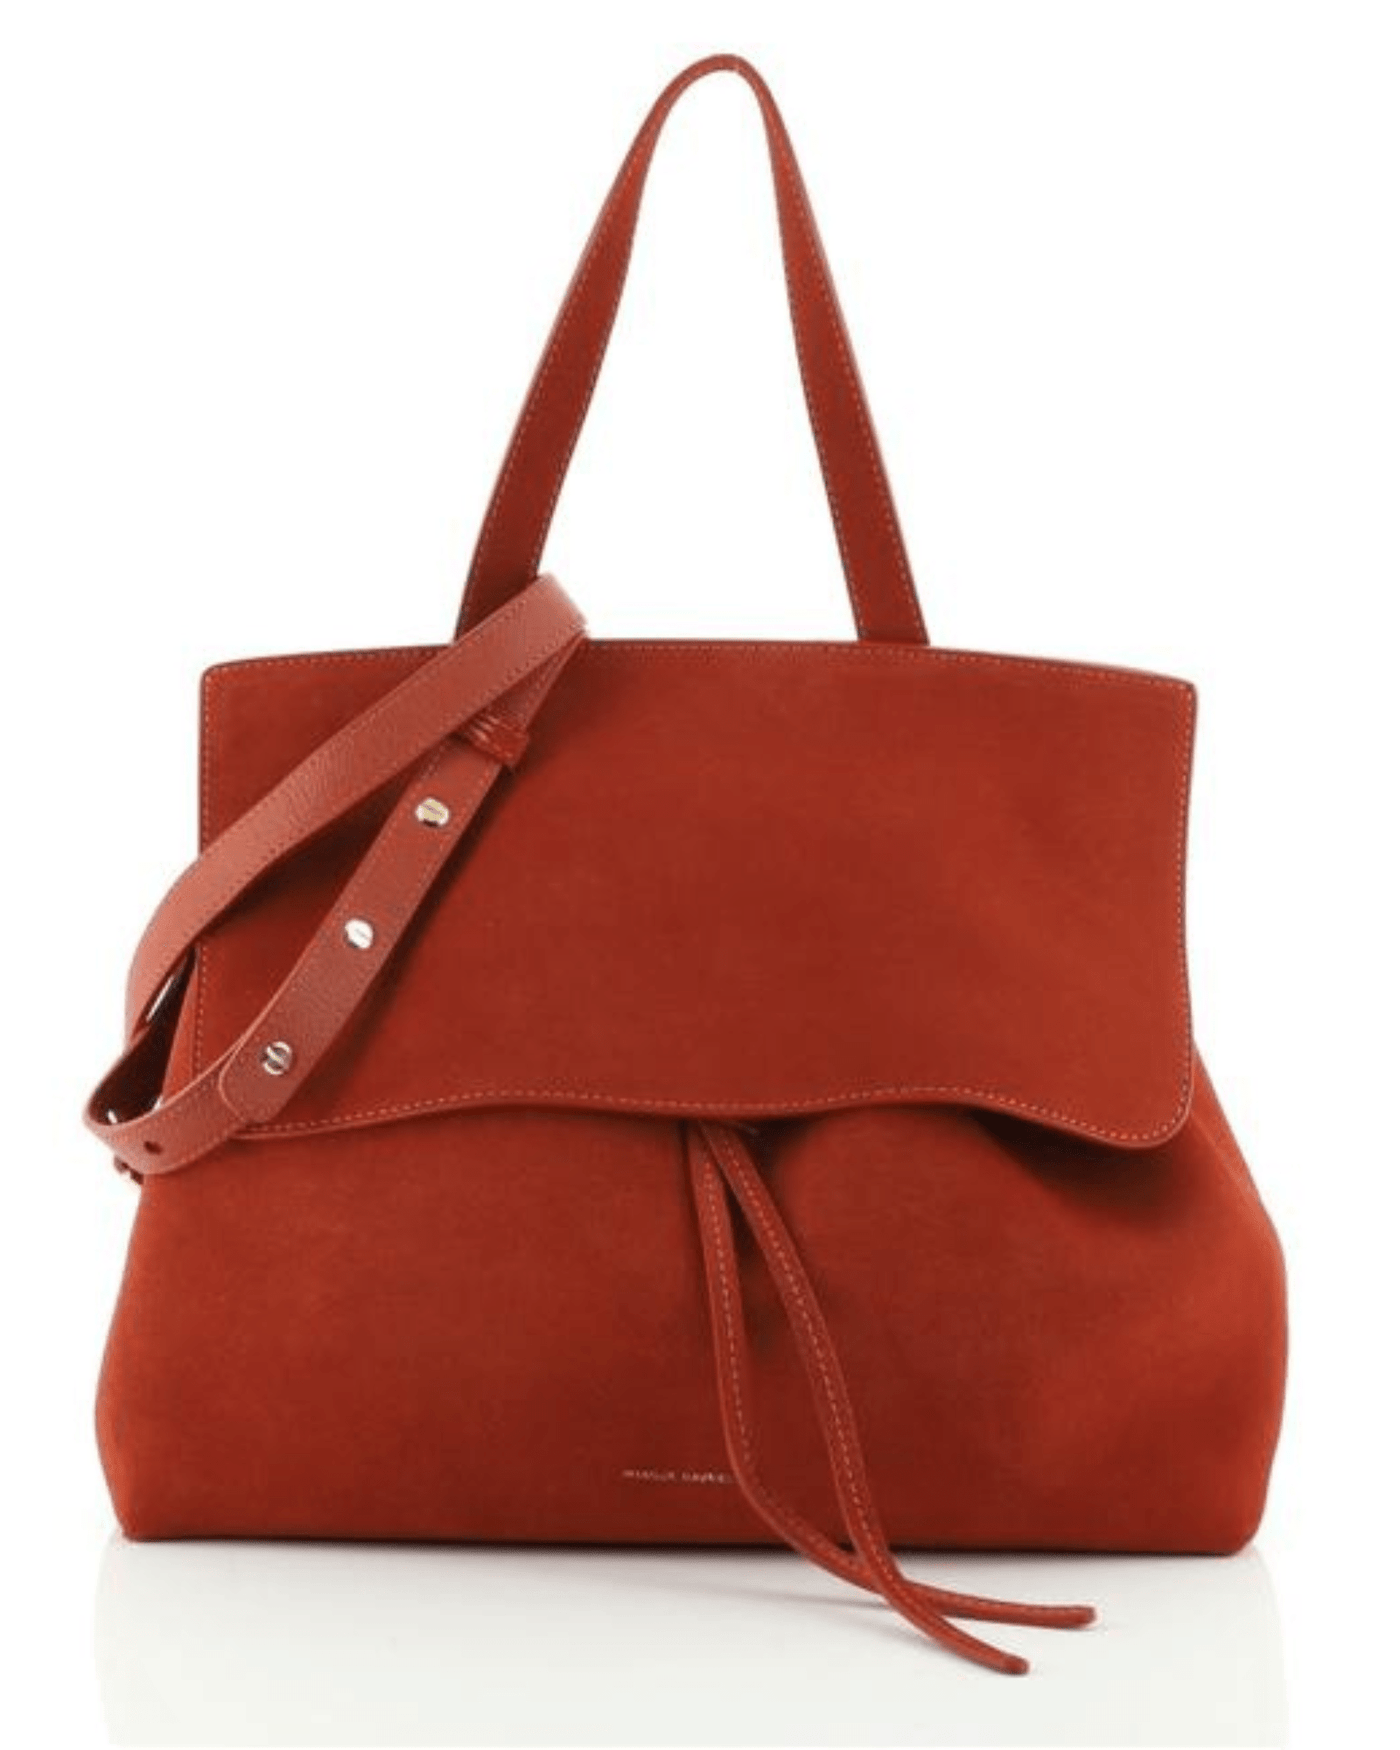 Le Zip Sac Bag - The Revury